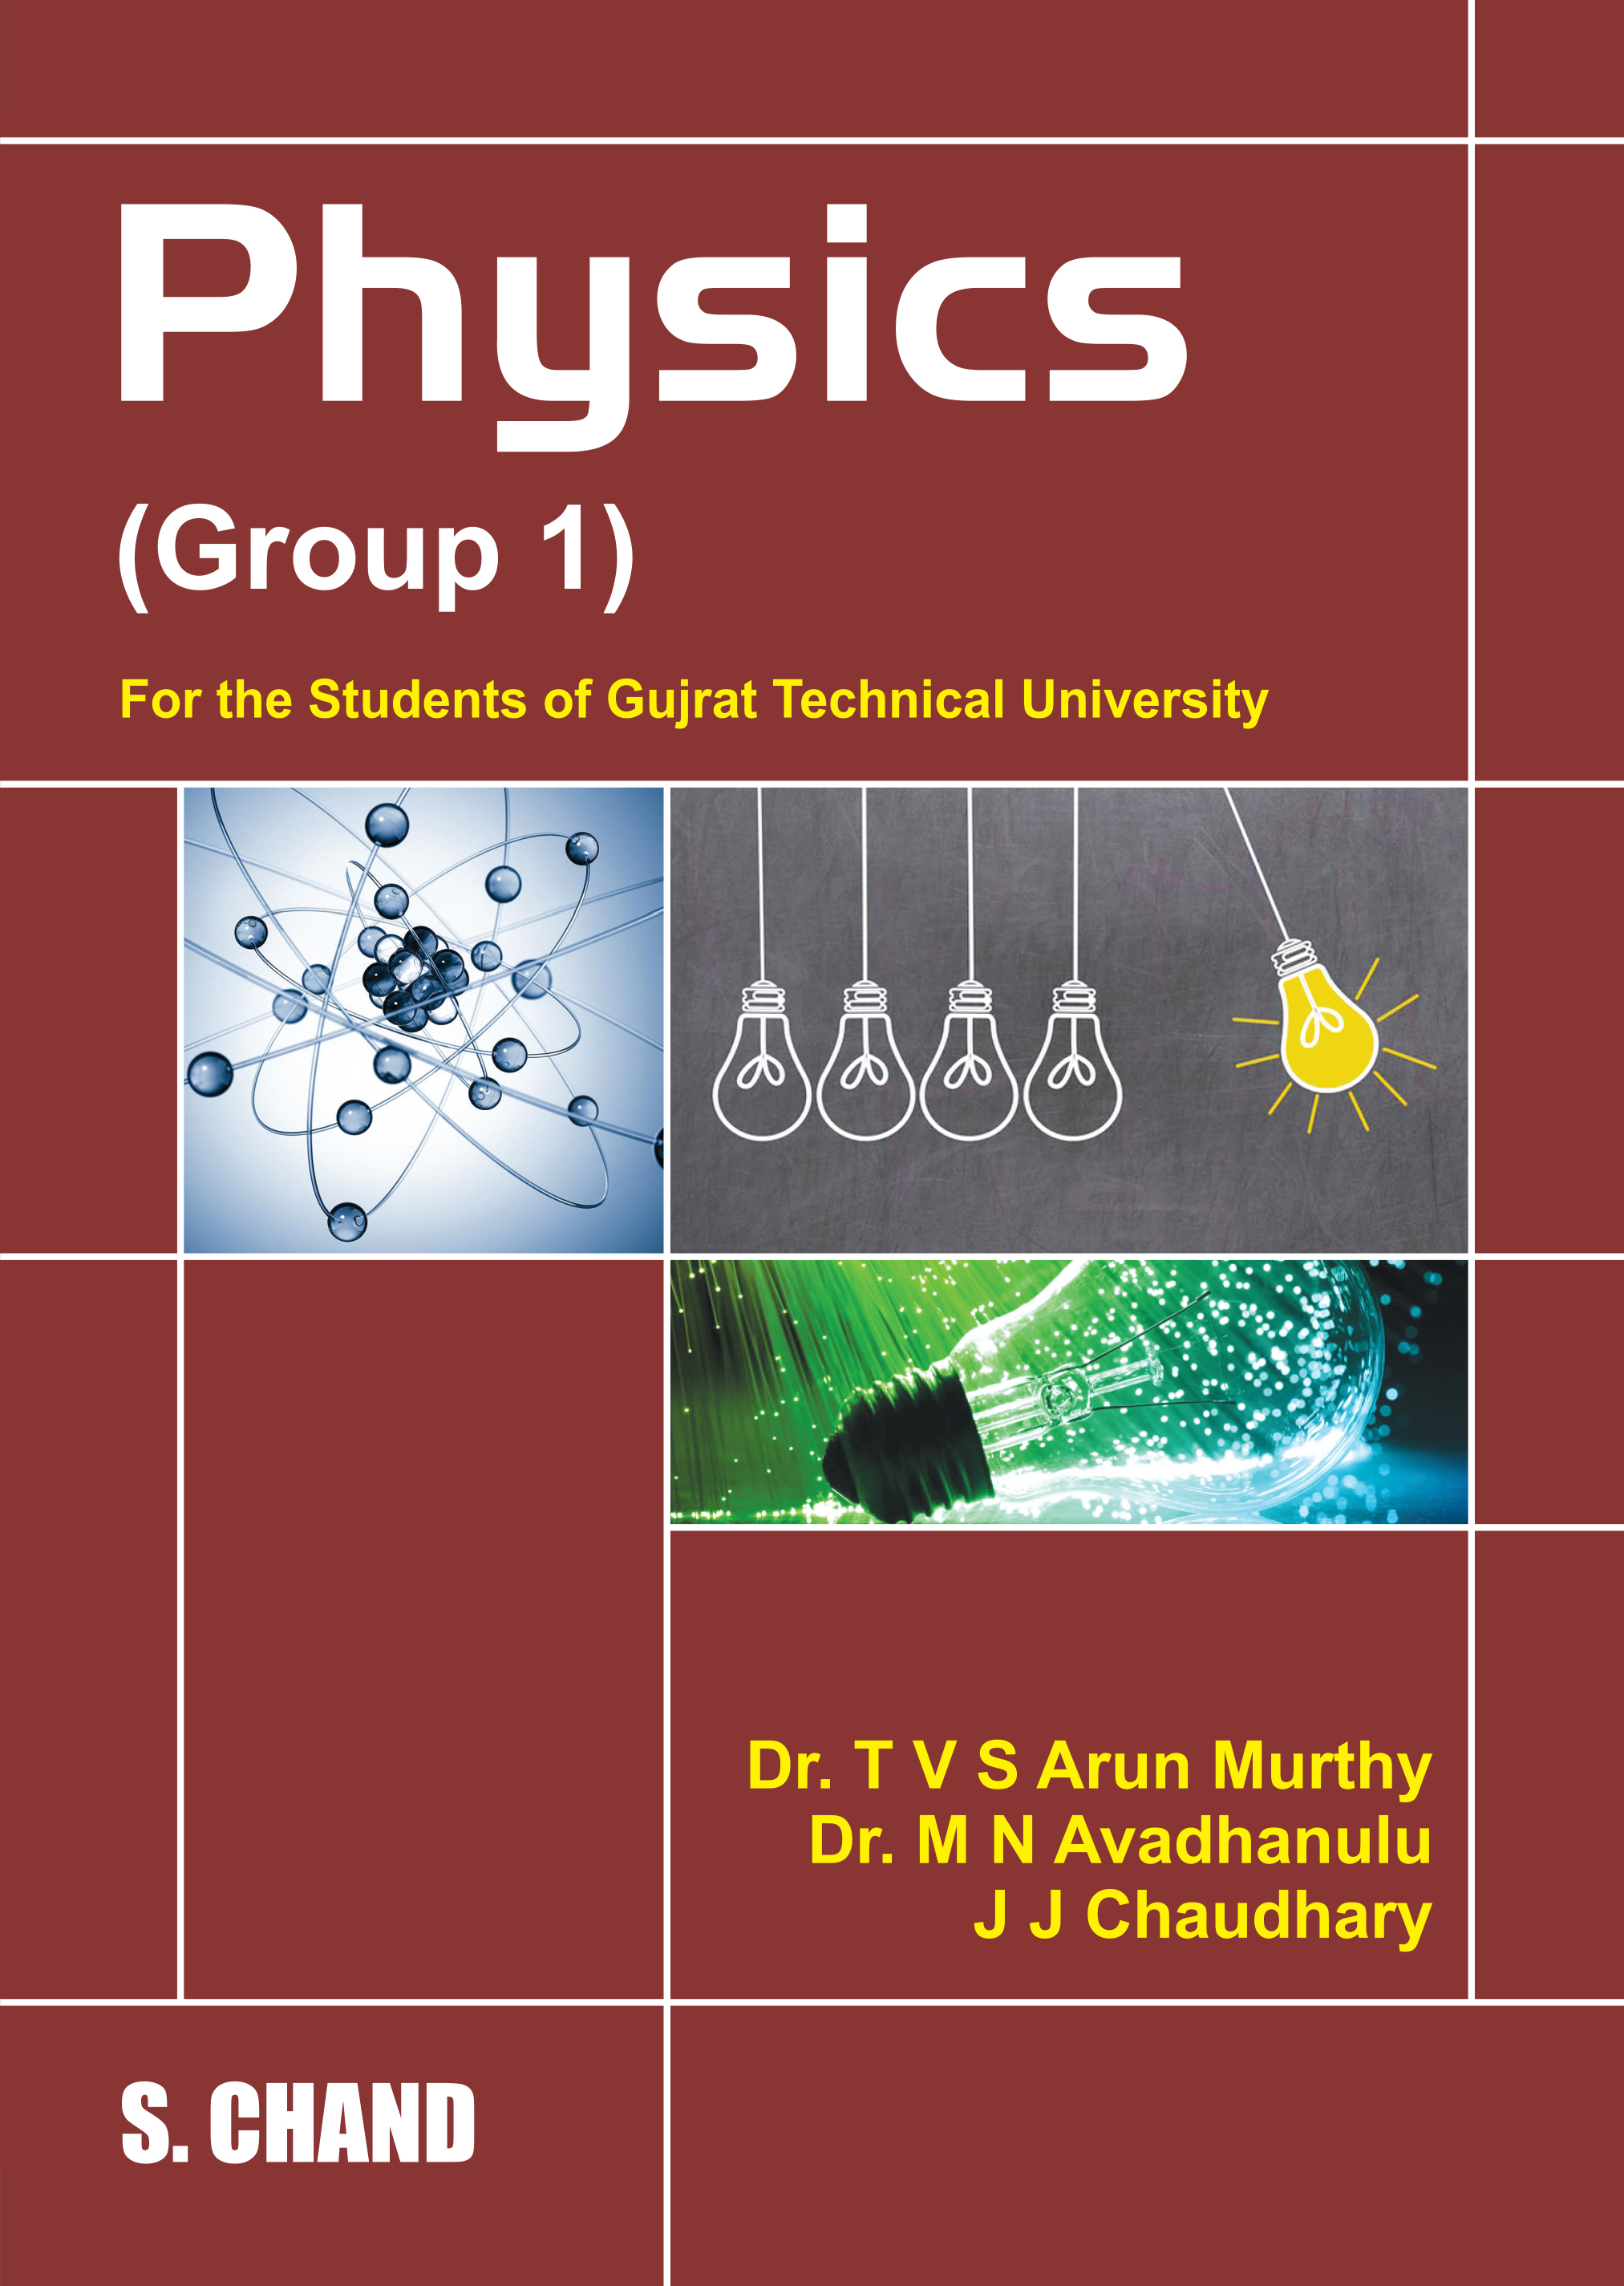 Physics (Group 1) For GTU